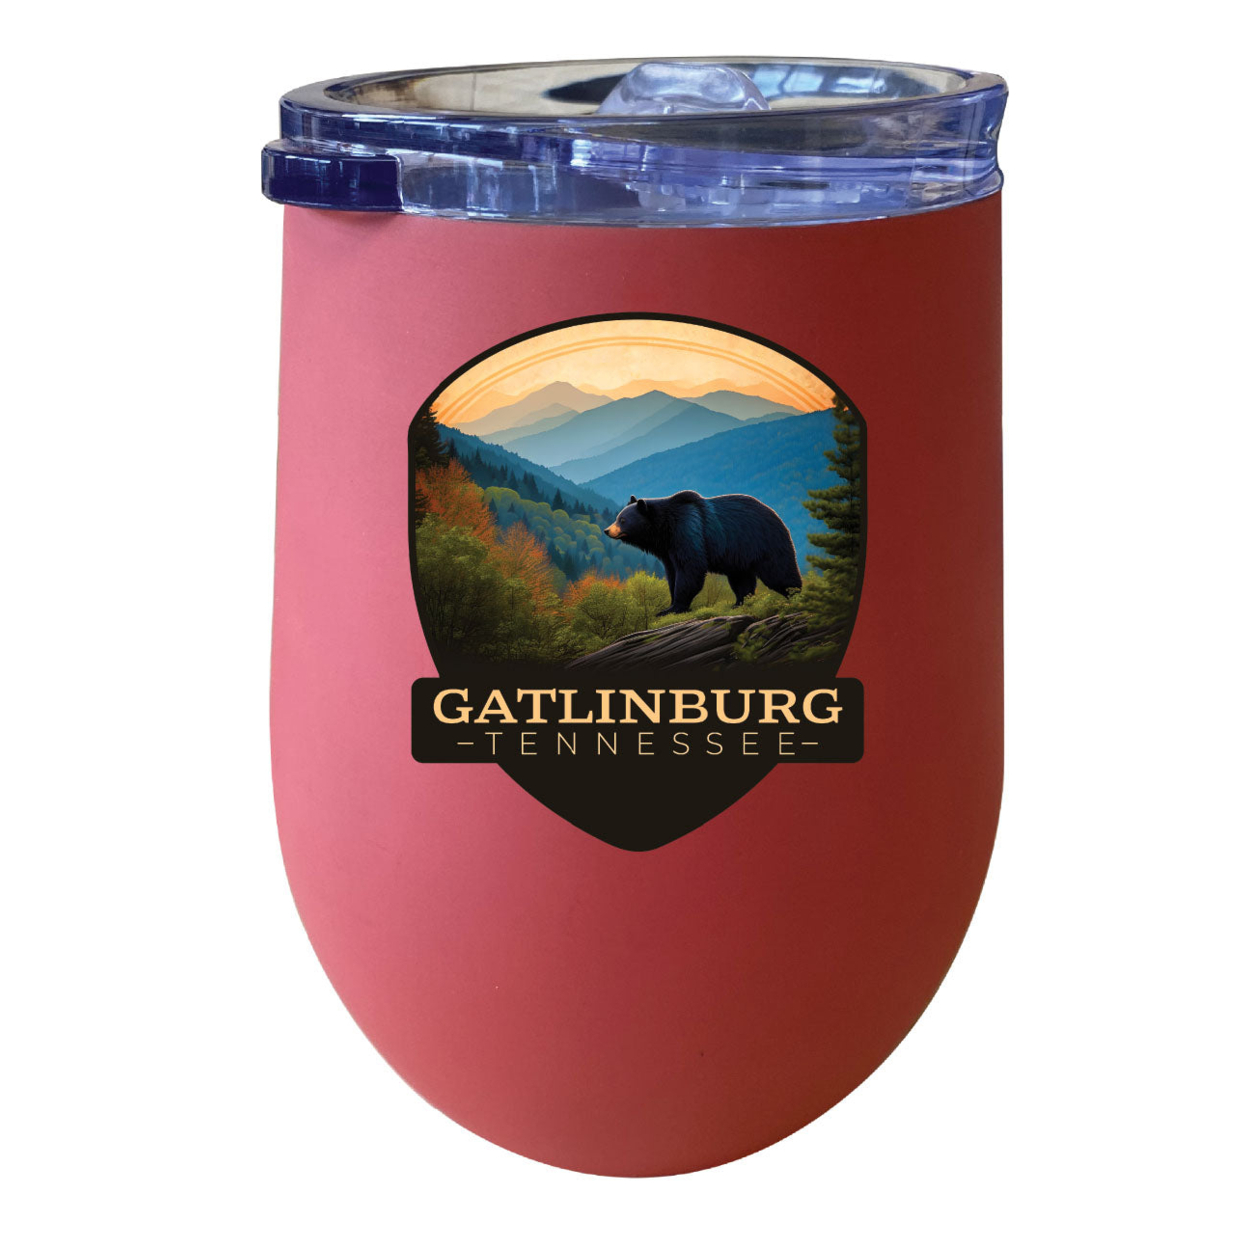 Gatlinburg Tennessee Souvenir 12 Oz Insulated Wine Stainless Steel Tumbler - White, A